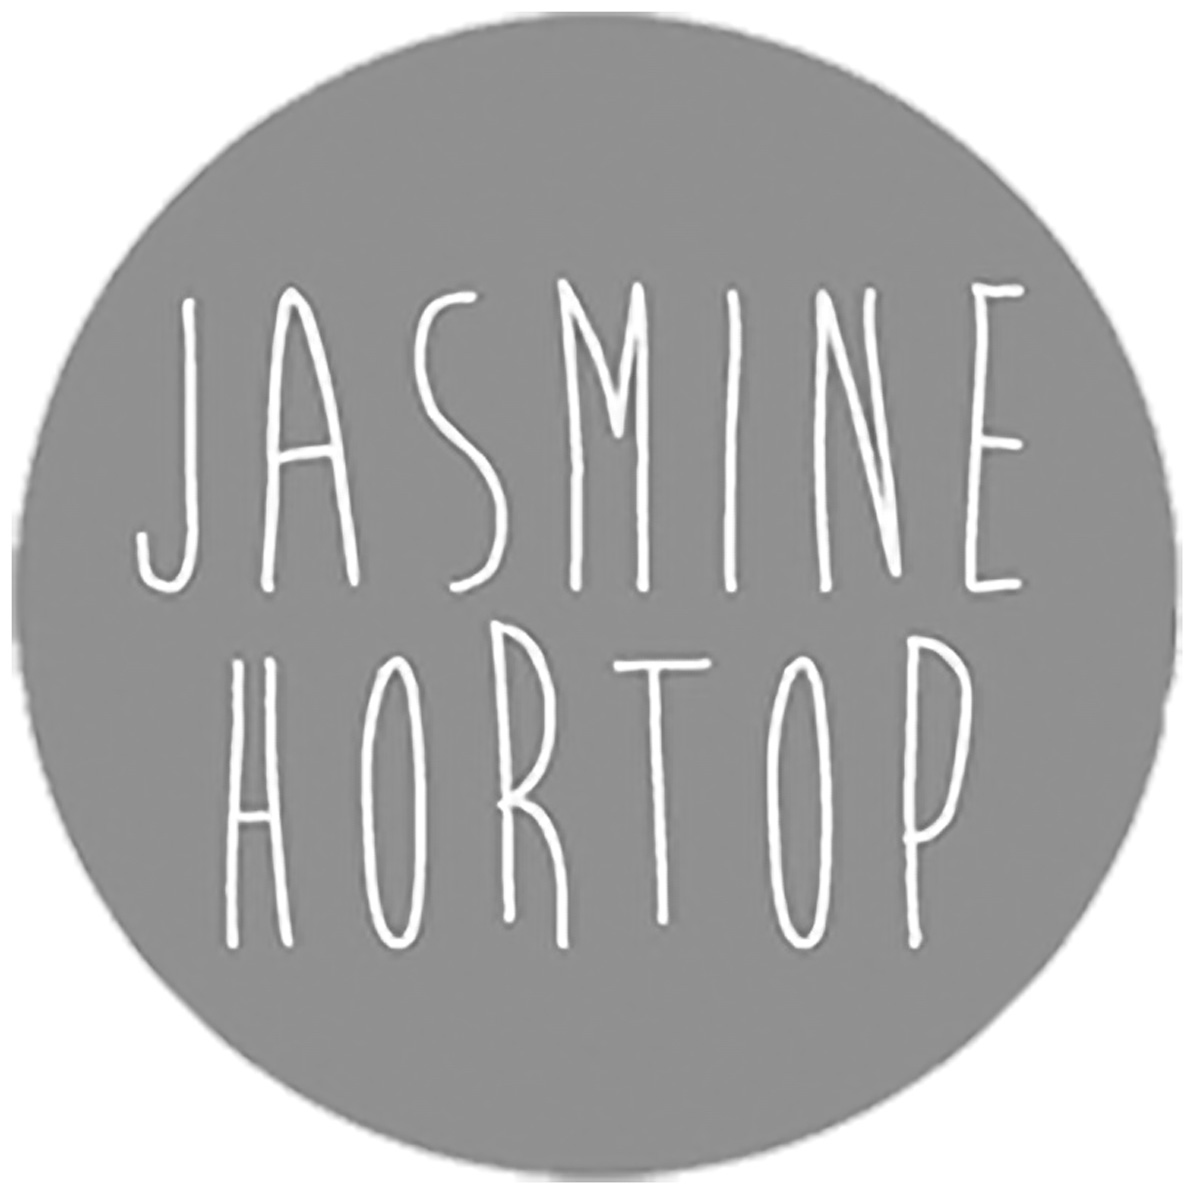 Jasmine Hortop's blog logo